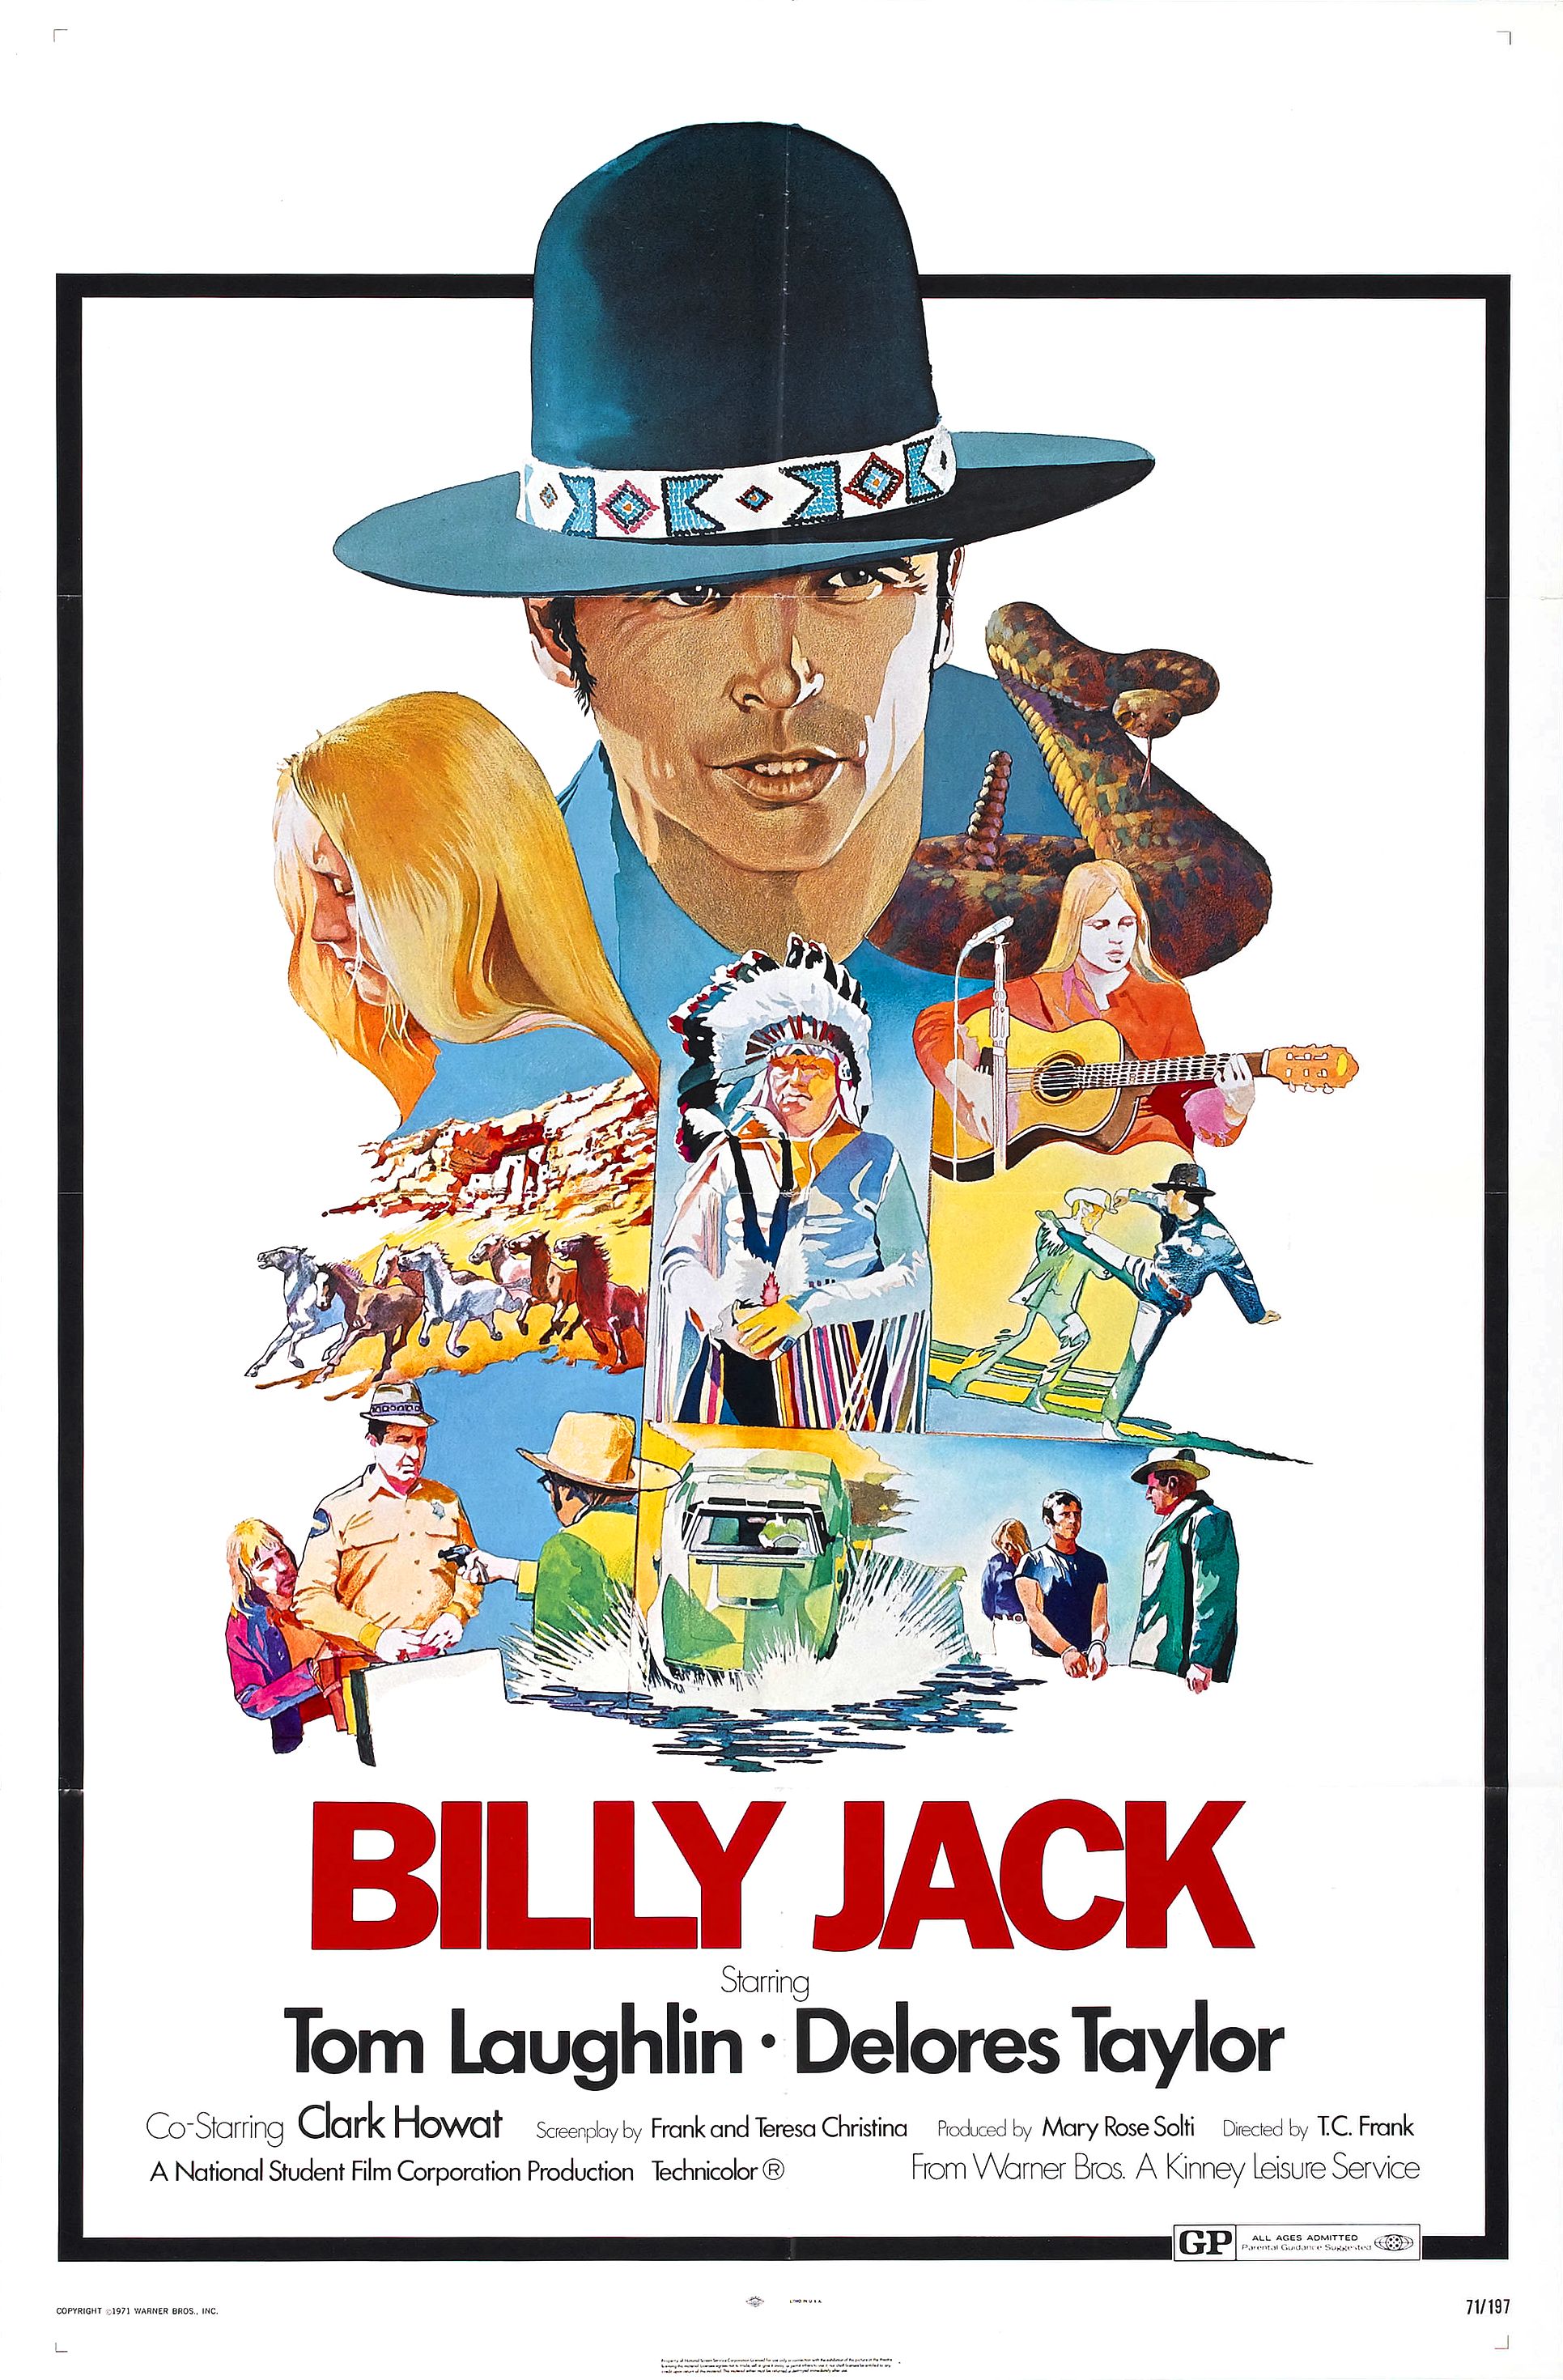 Nonton film Billy Jack layarkaca21 indoxx1 ganool online streaming terbaru